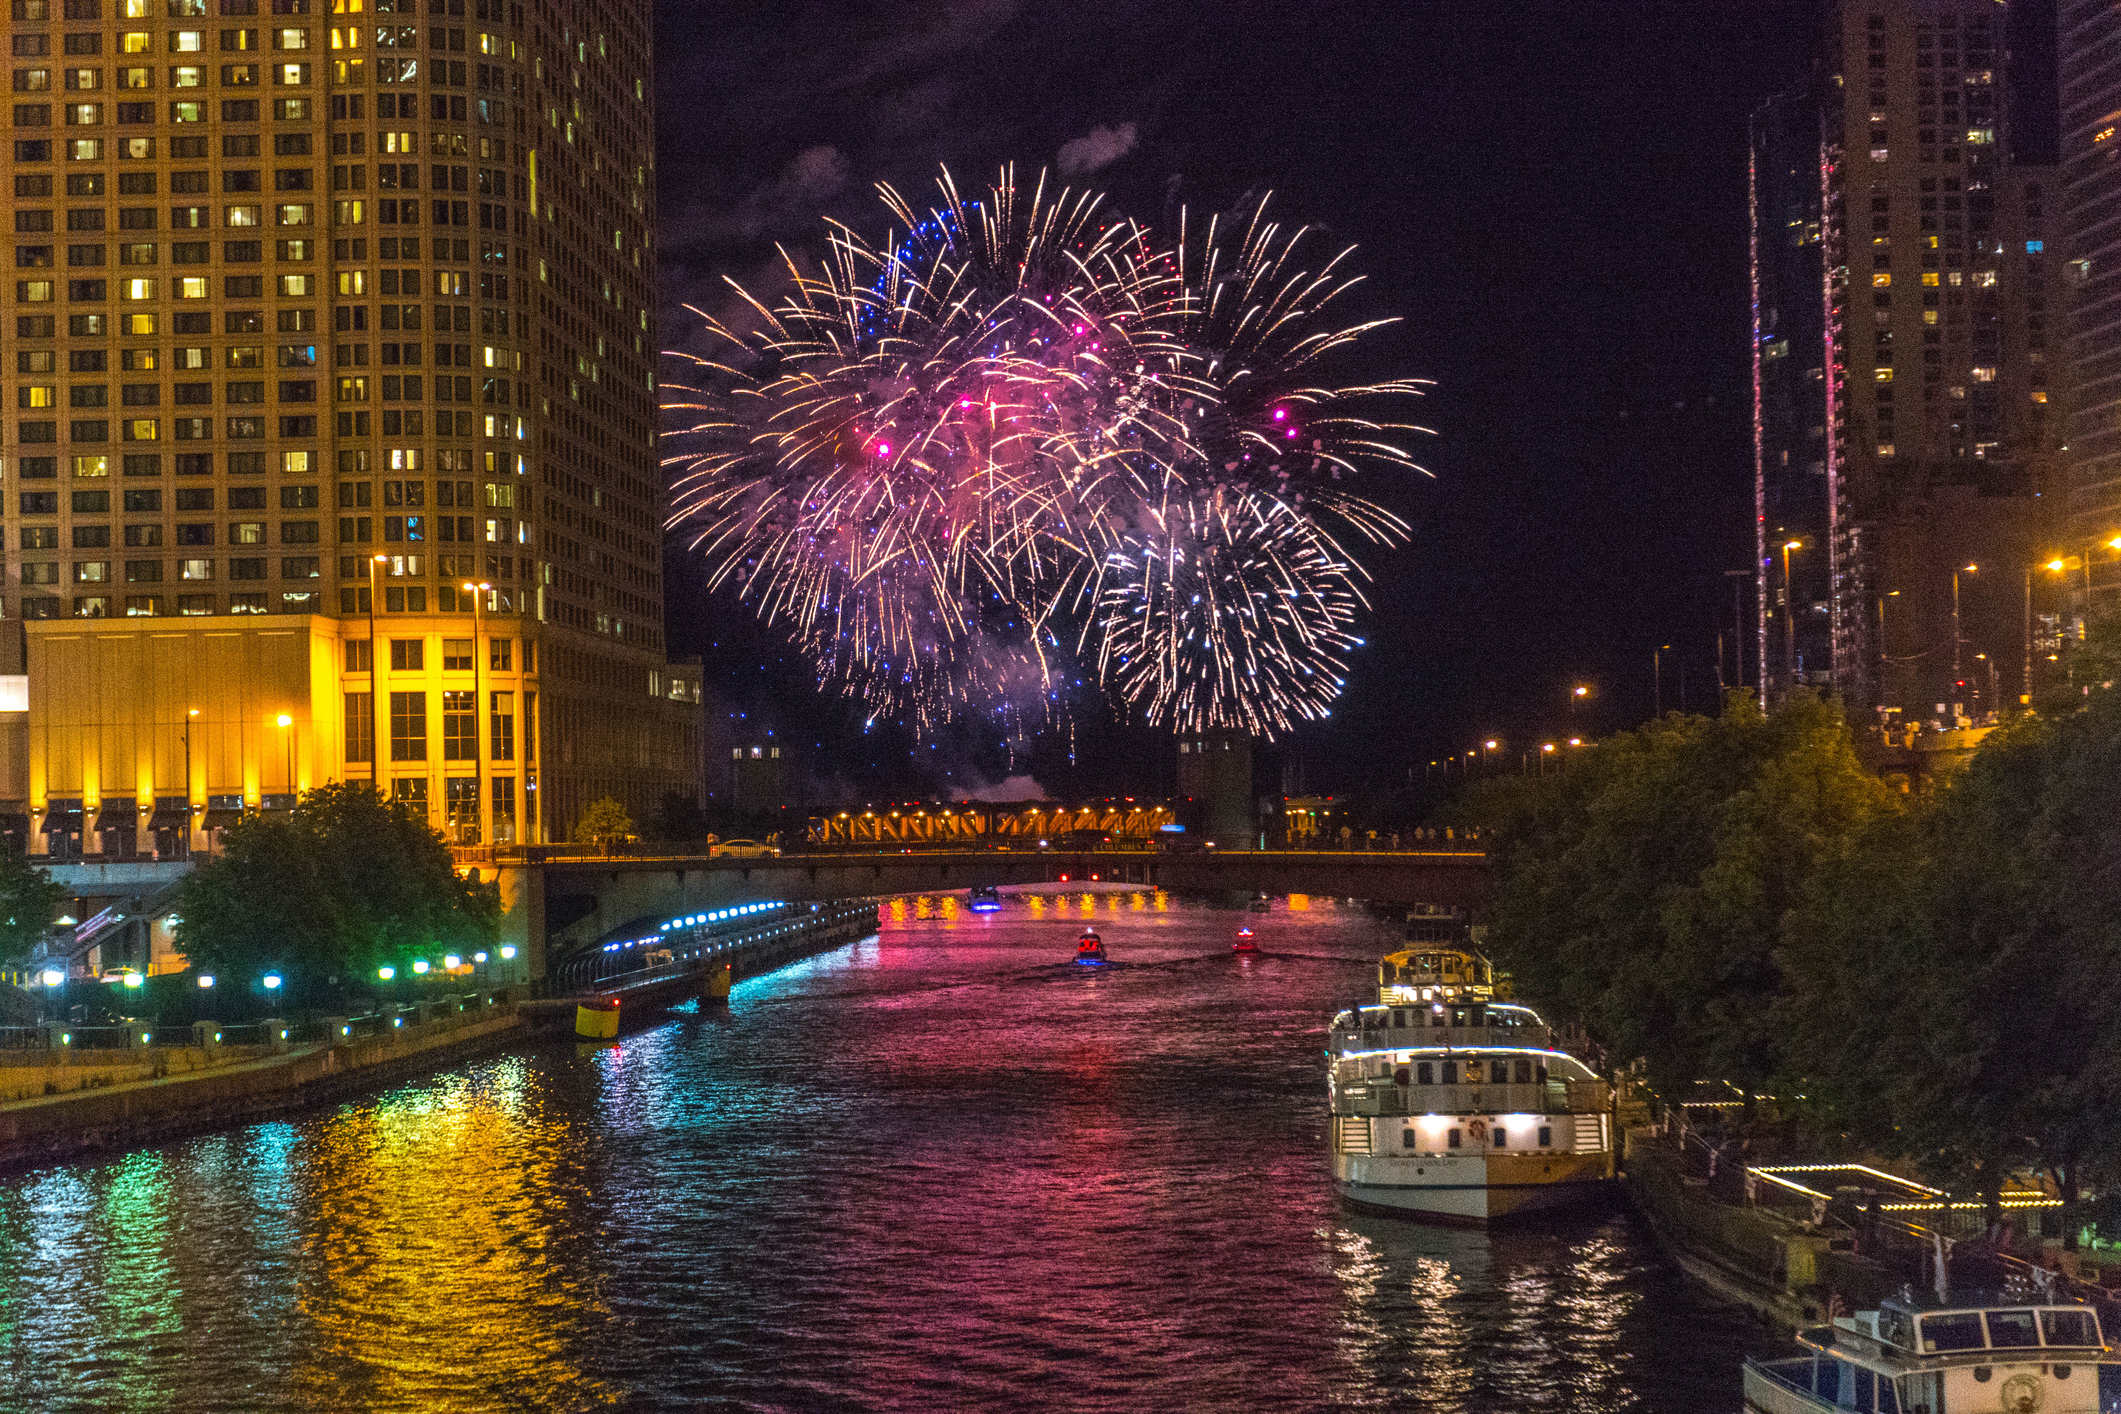 Fireworks exploding over a river.